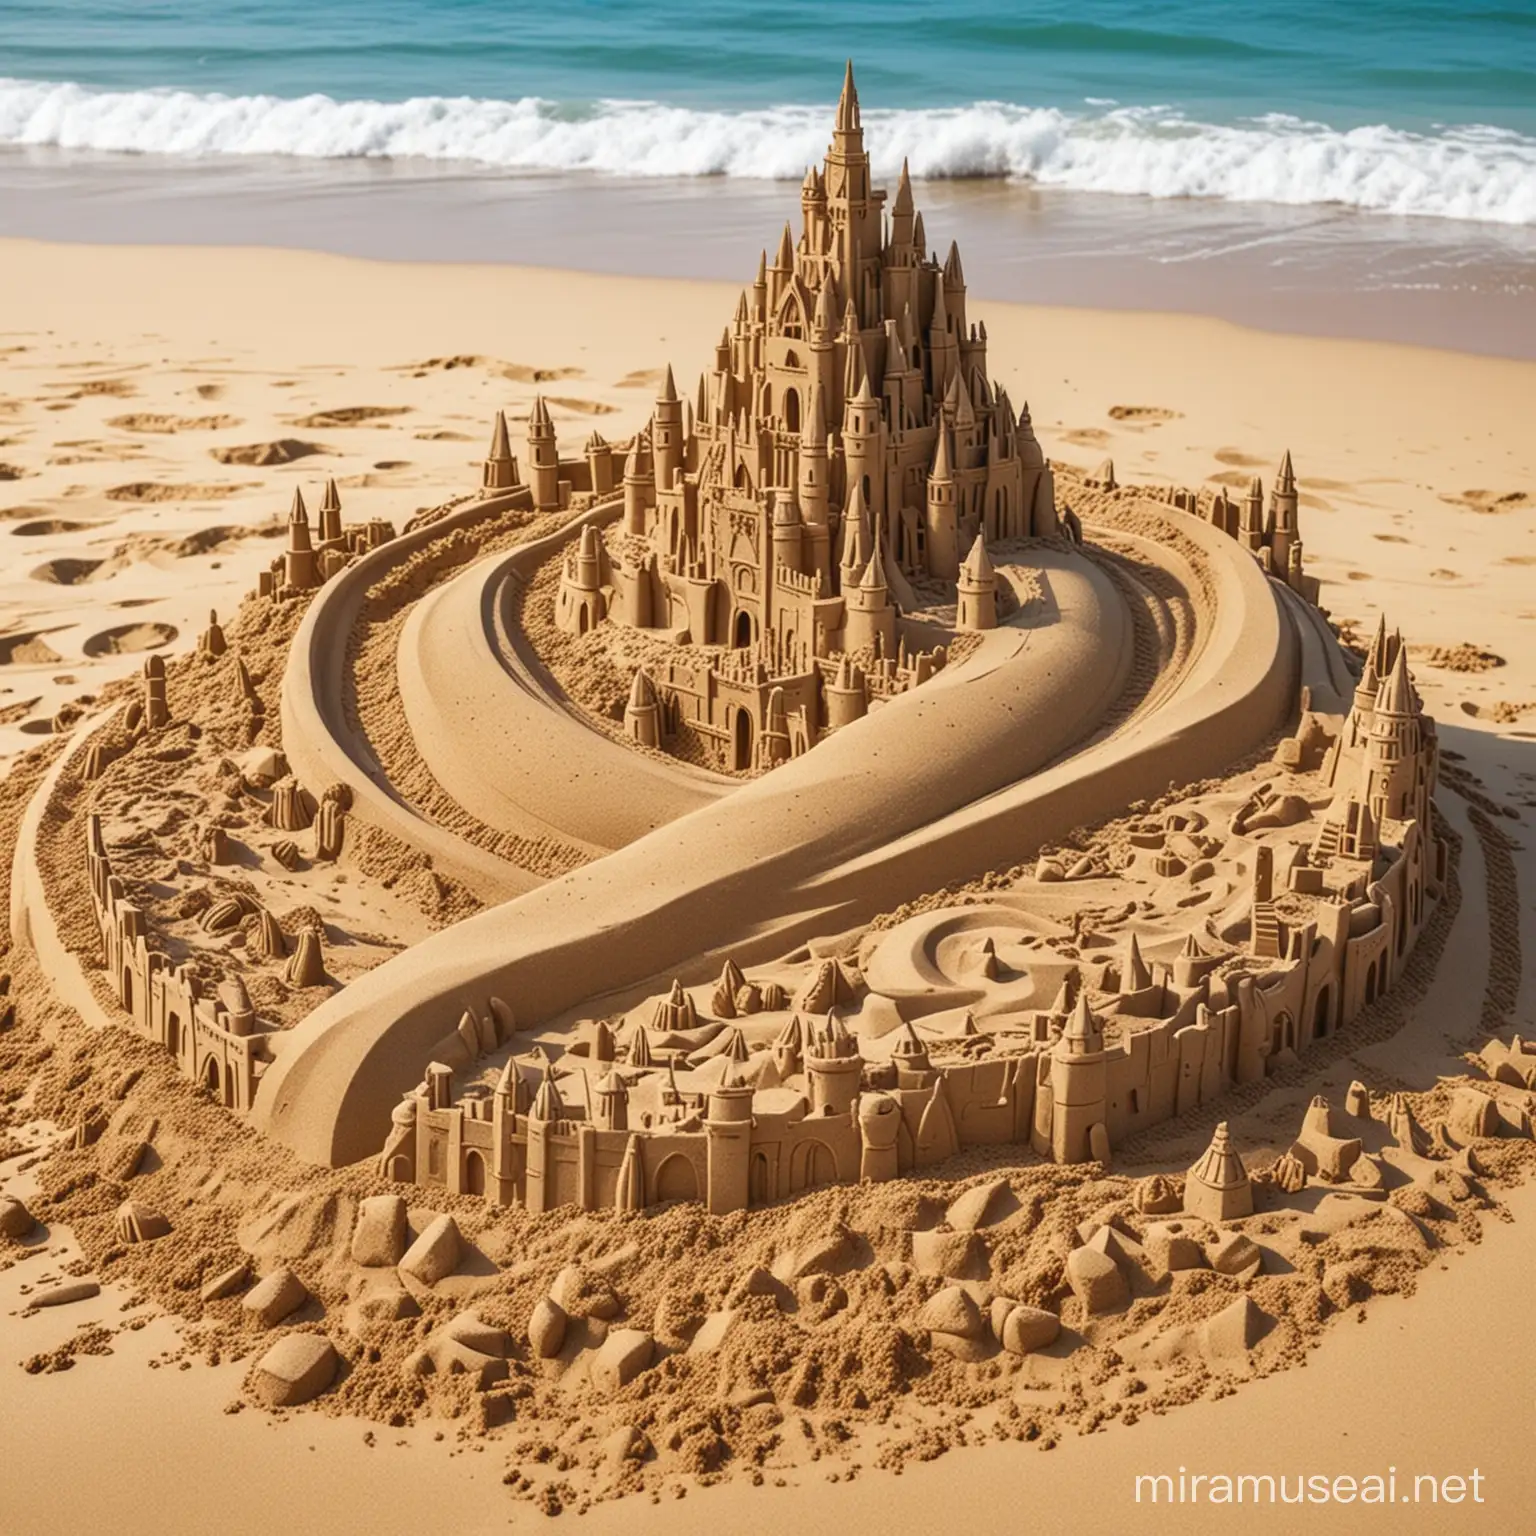 Exquisite 3D Sand Sculpture on Stunning Beach Background